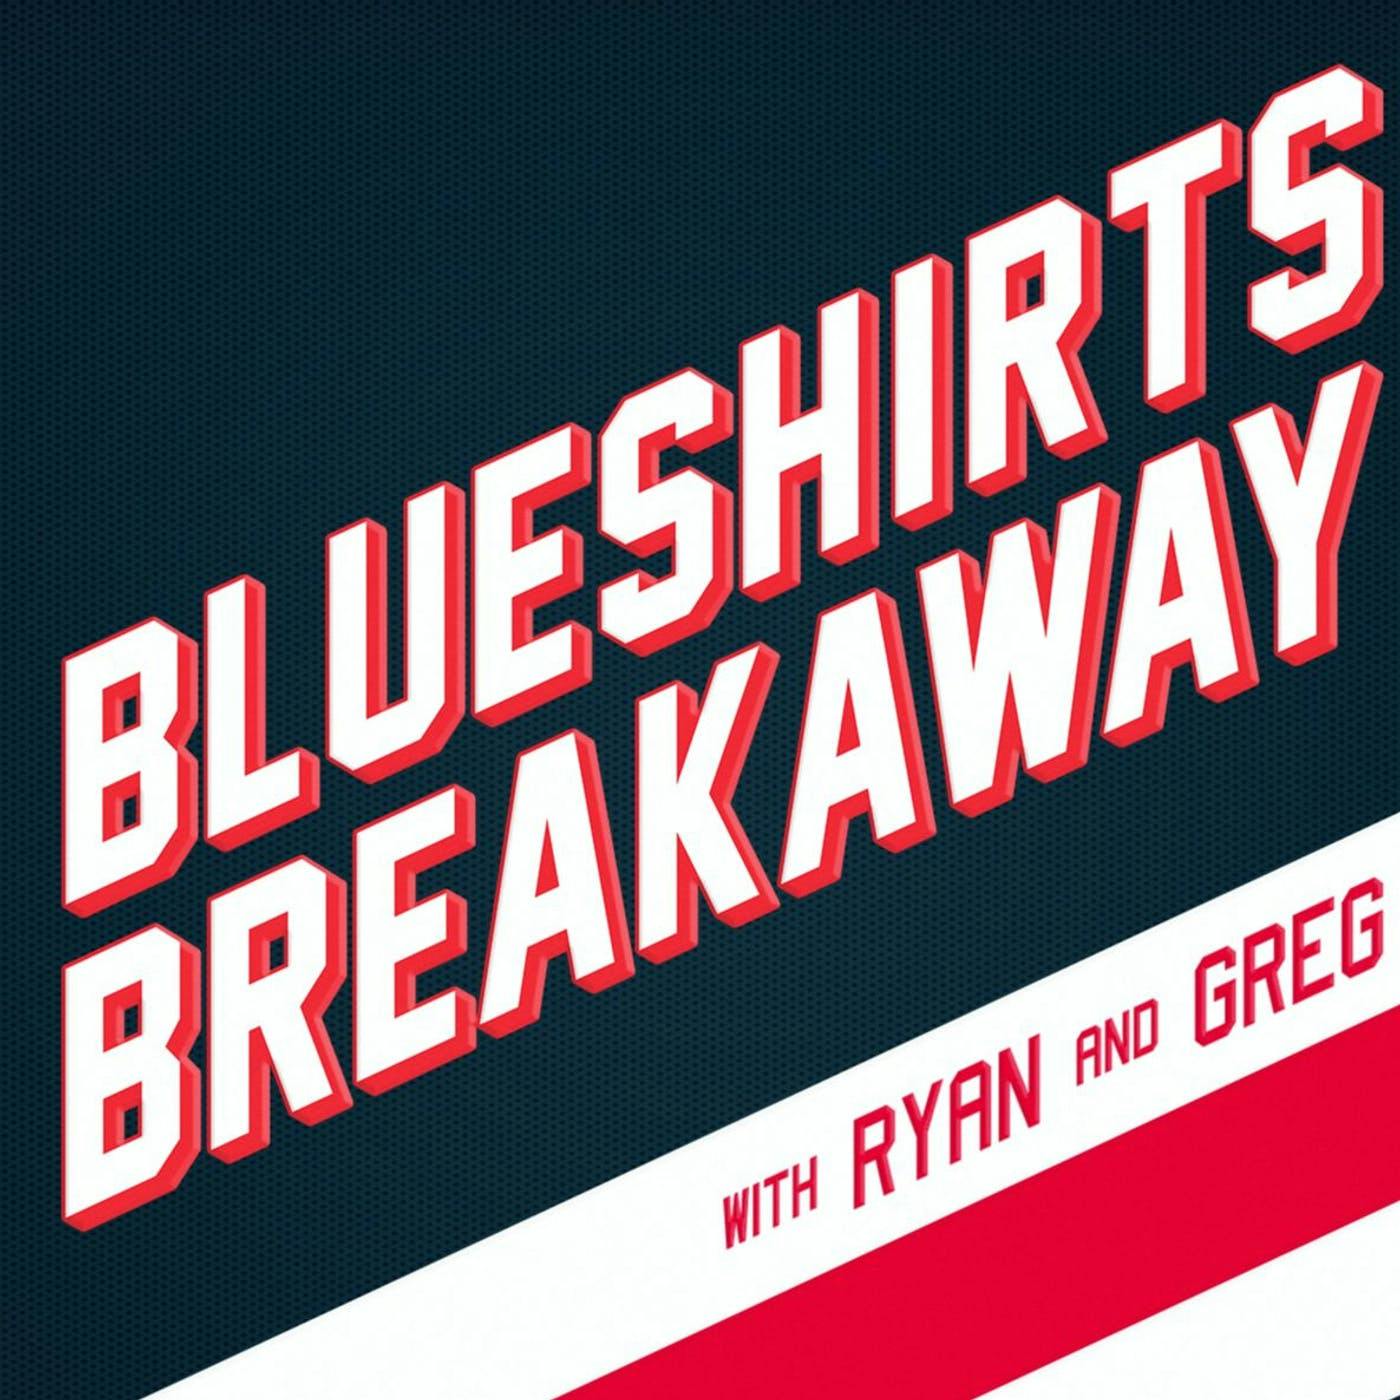 Blueshirts Breakaway EP 114 - Shattenkirkless and Hank Analysis with Catherine Silverman